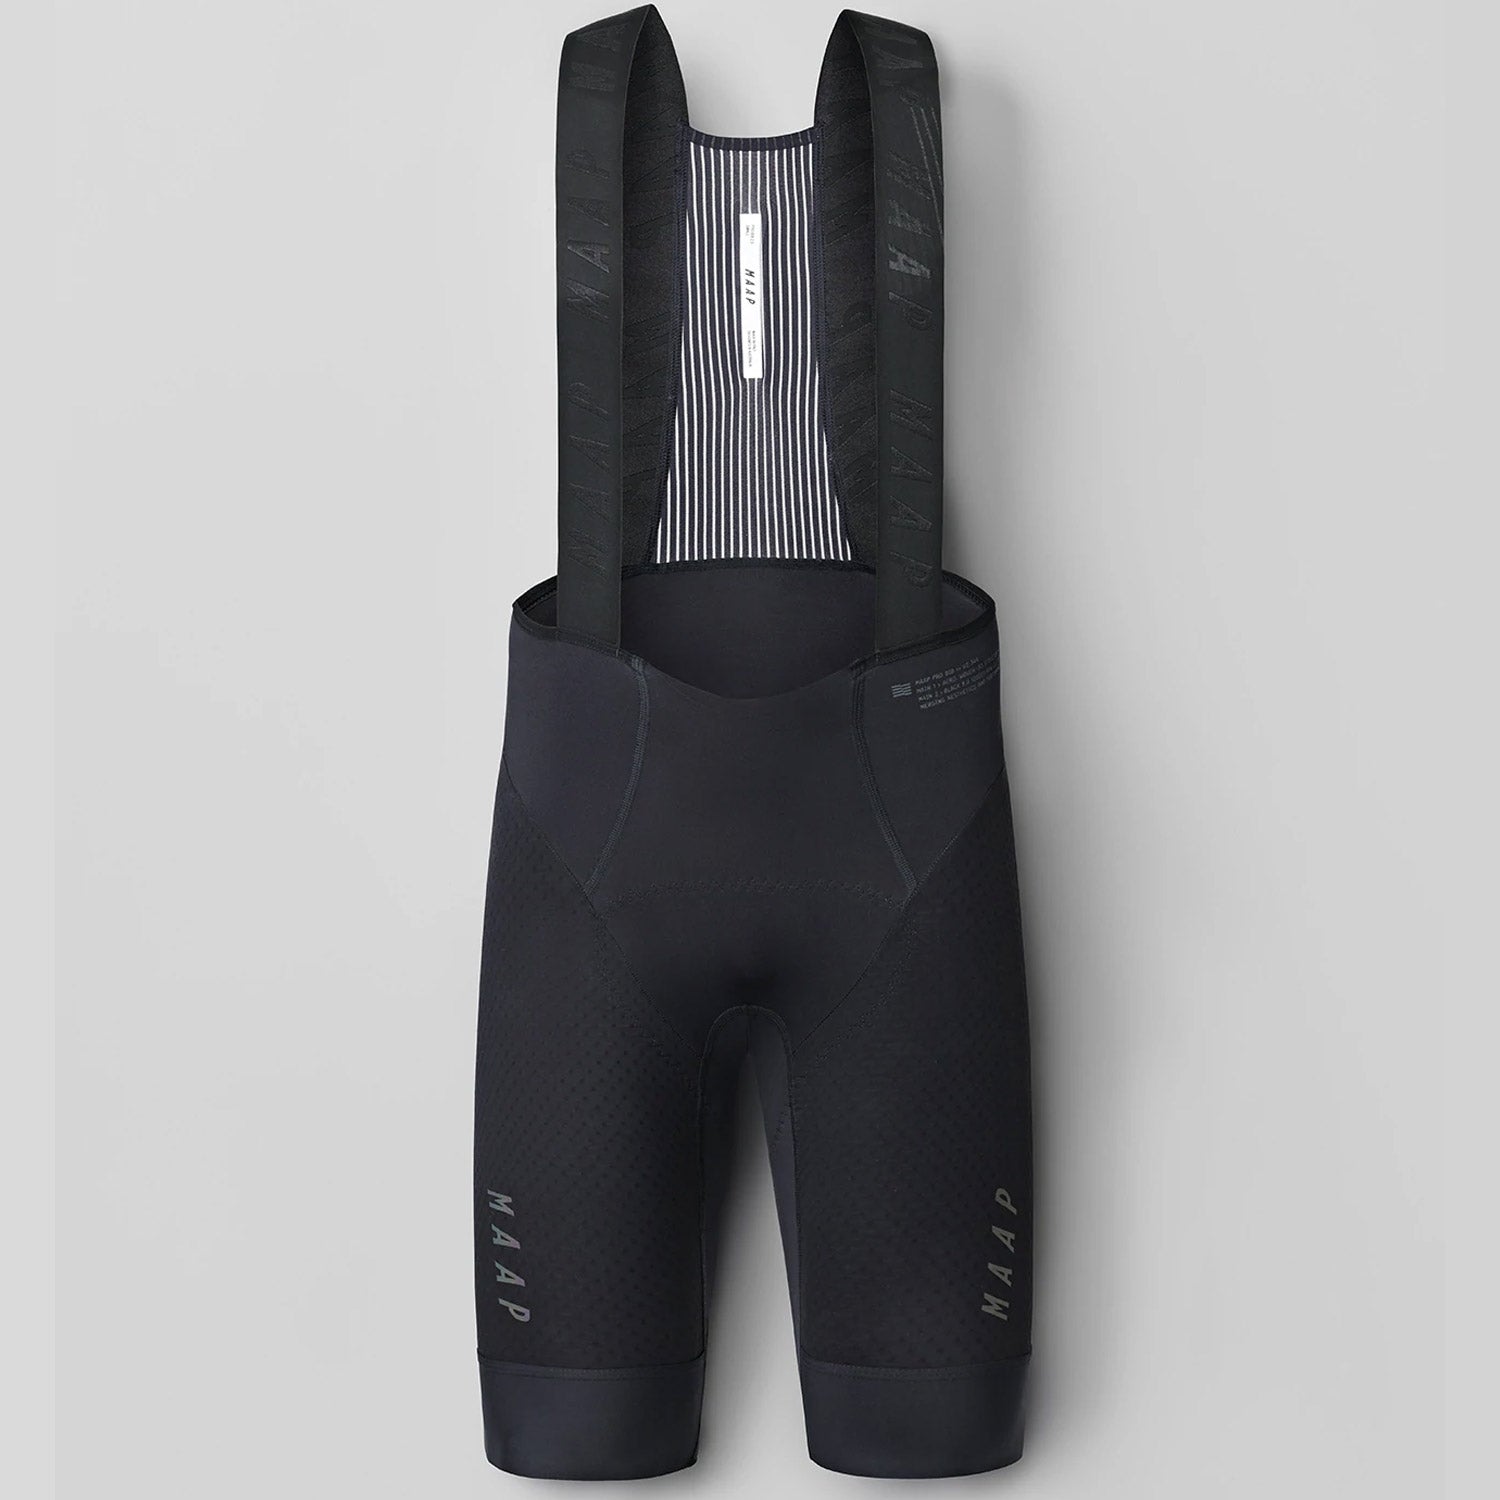 Maap Pro Bib 2.0 bib shorts - Black | All4cycling